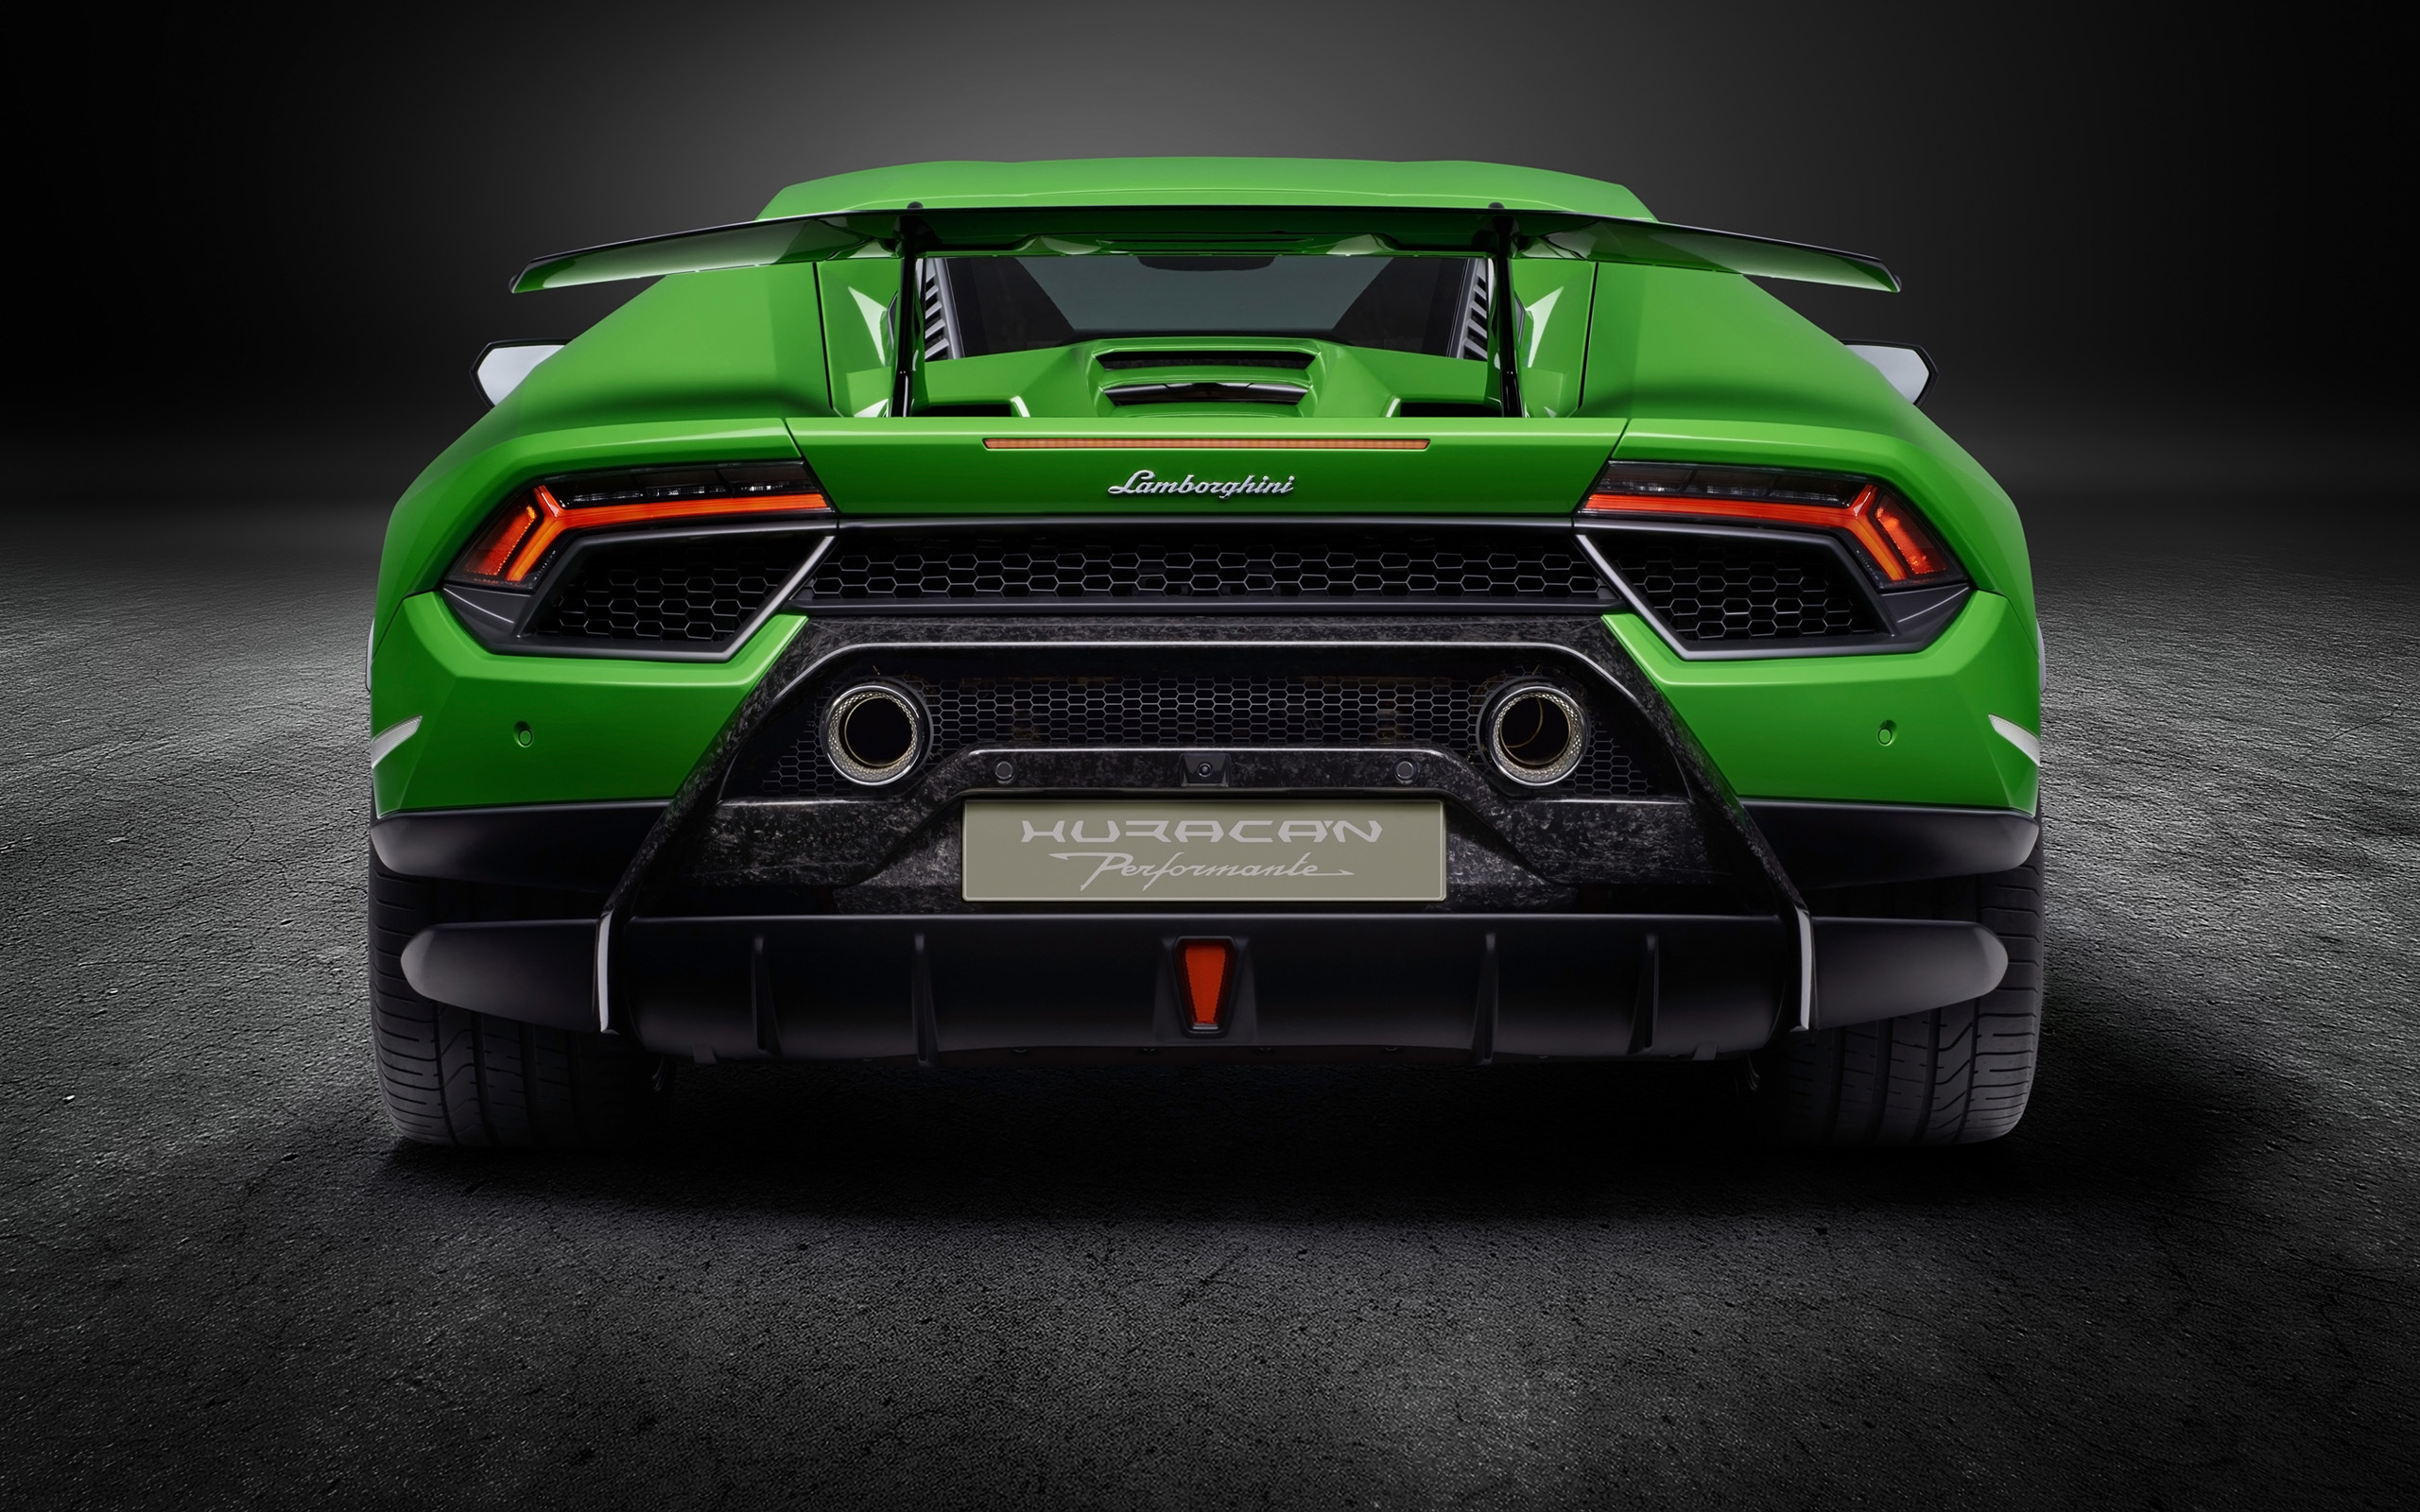 Baixe gratuitamente a imagem Lamborghini, Carro, Super Carro, Lamborghini Huracan Performante, Veículos, Lamborghini Huracán Performance na área de trabalho do seu PC